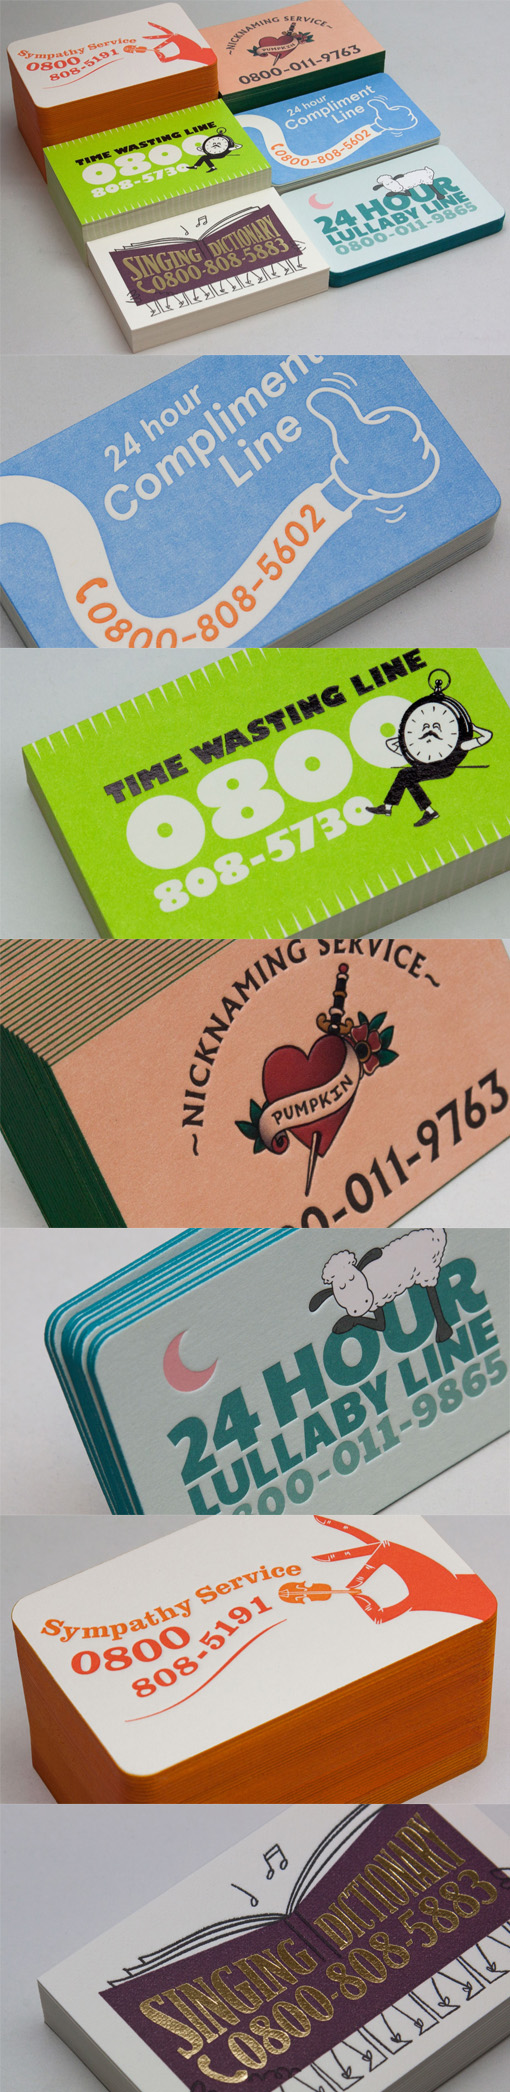 Humorous Vintage Style Fictional Phone Line Letterpress Business Card Design